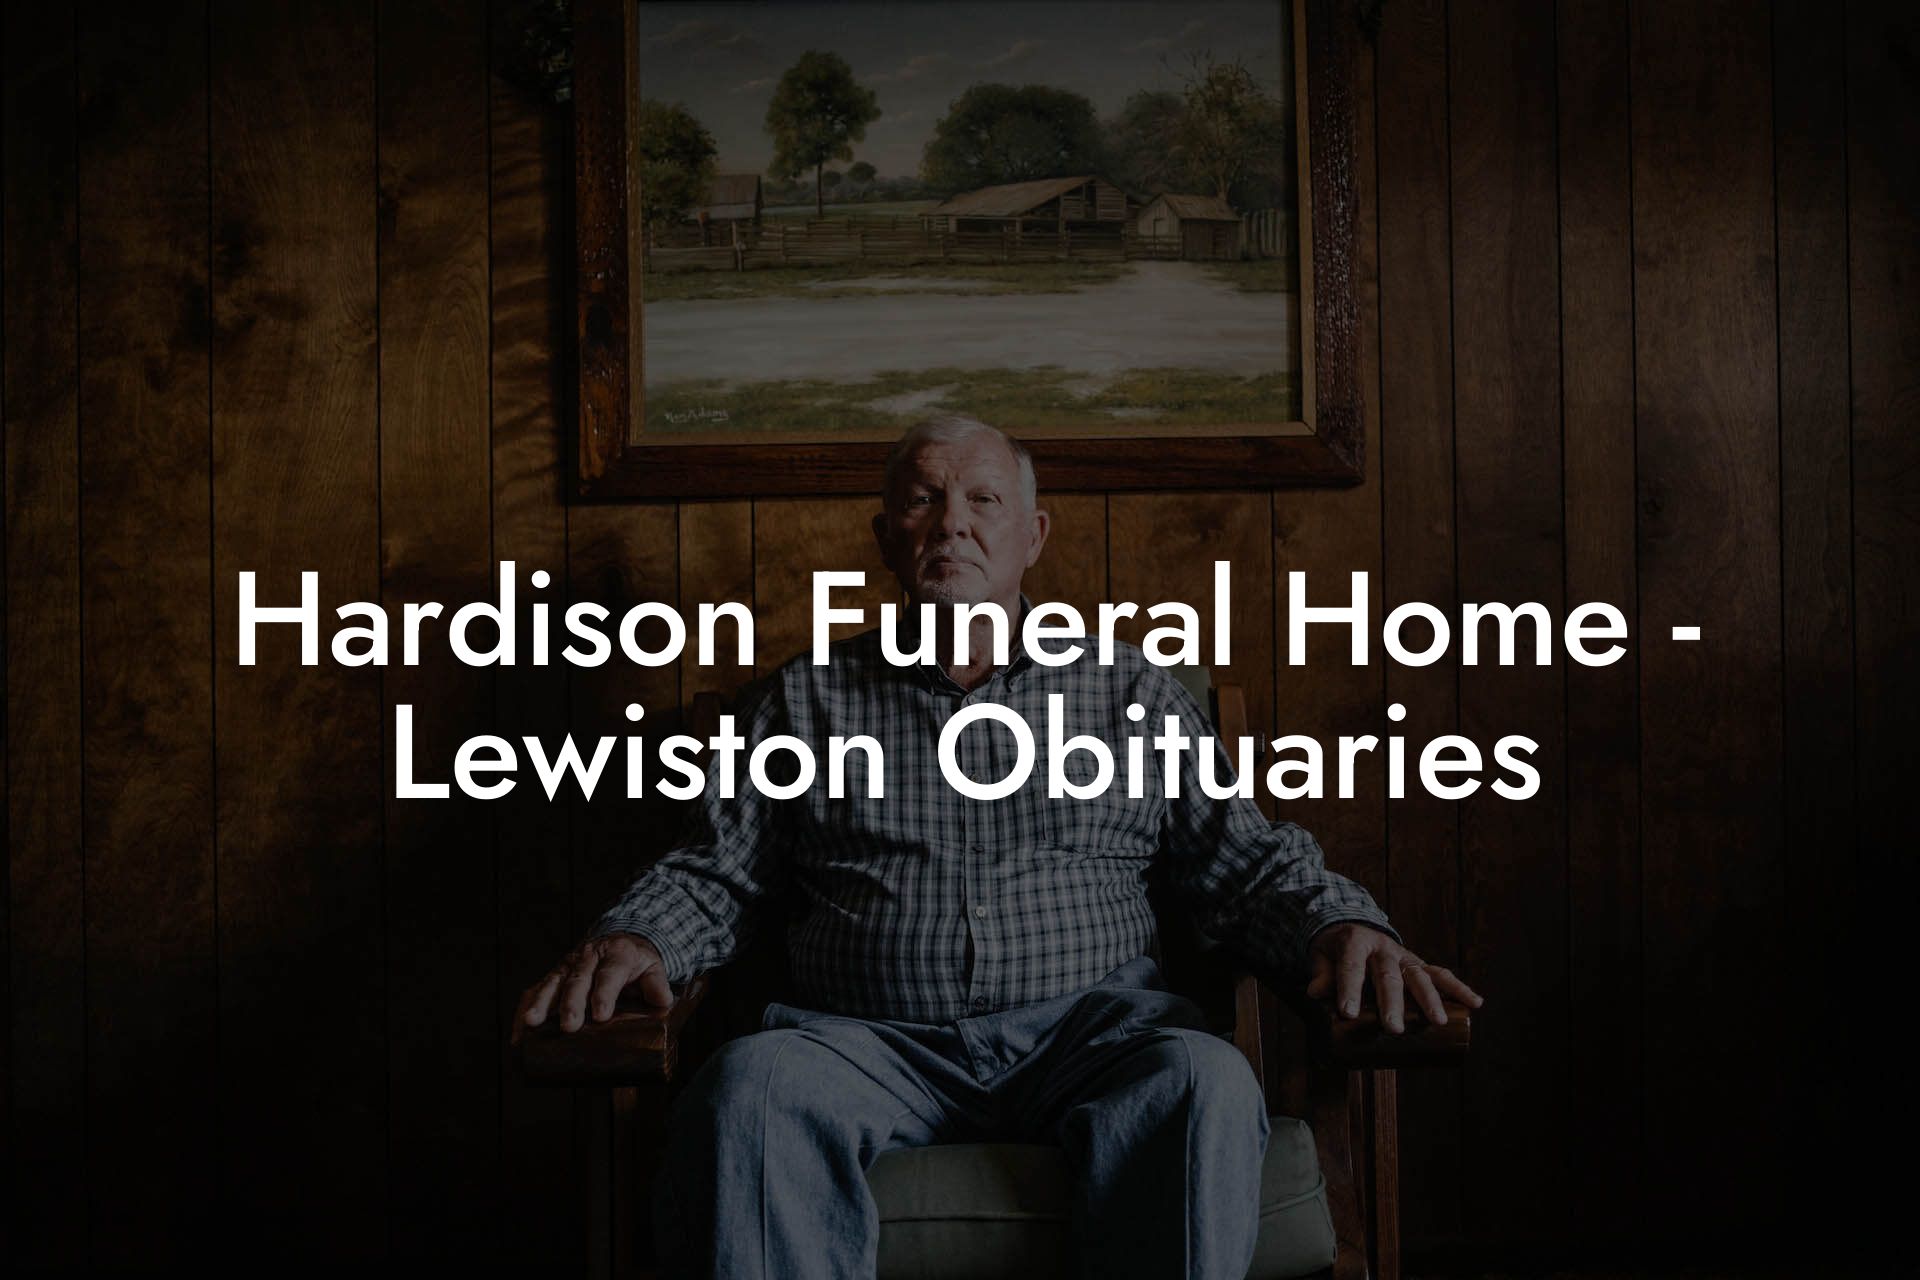 Hardison Funeral Home - Lewiston Obituaries